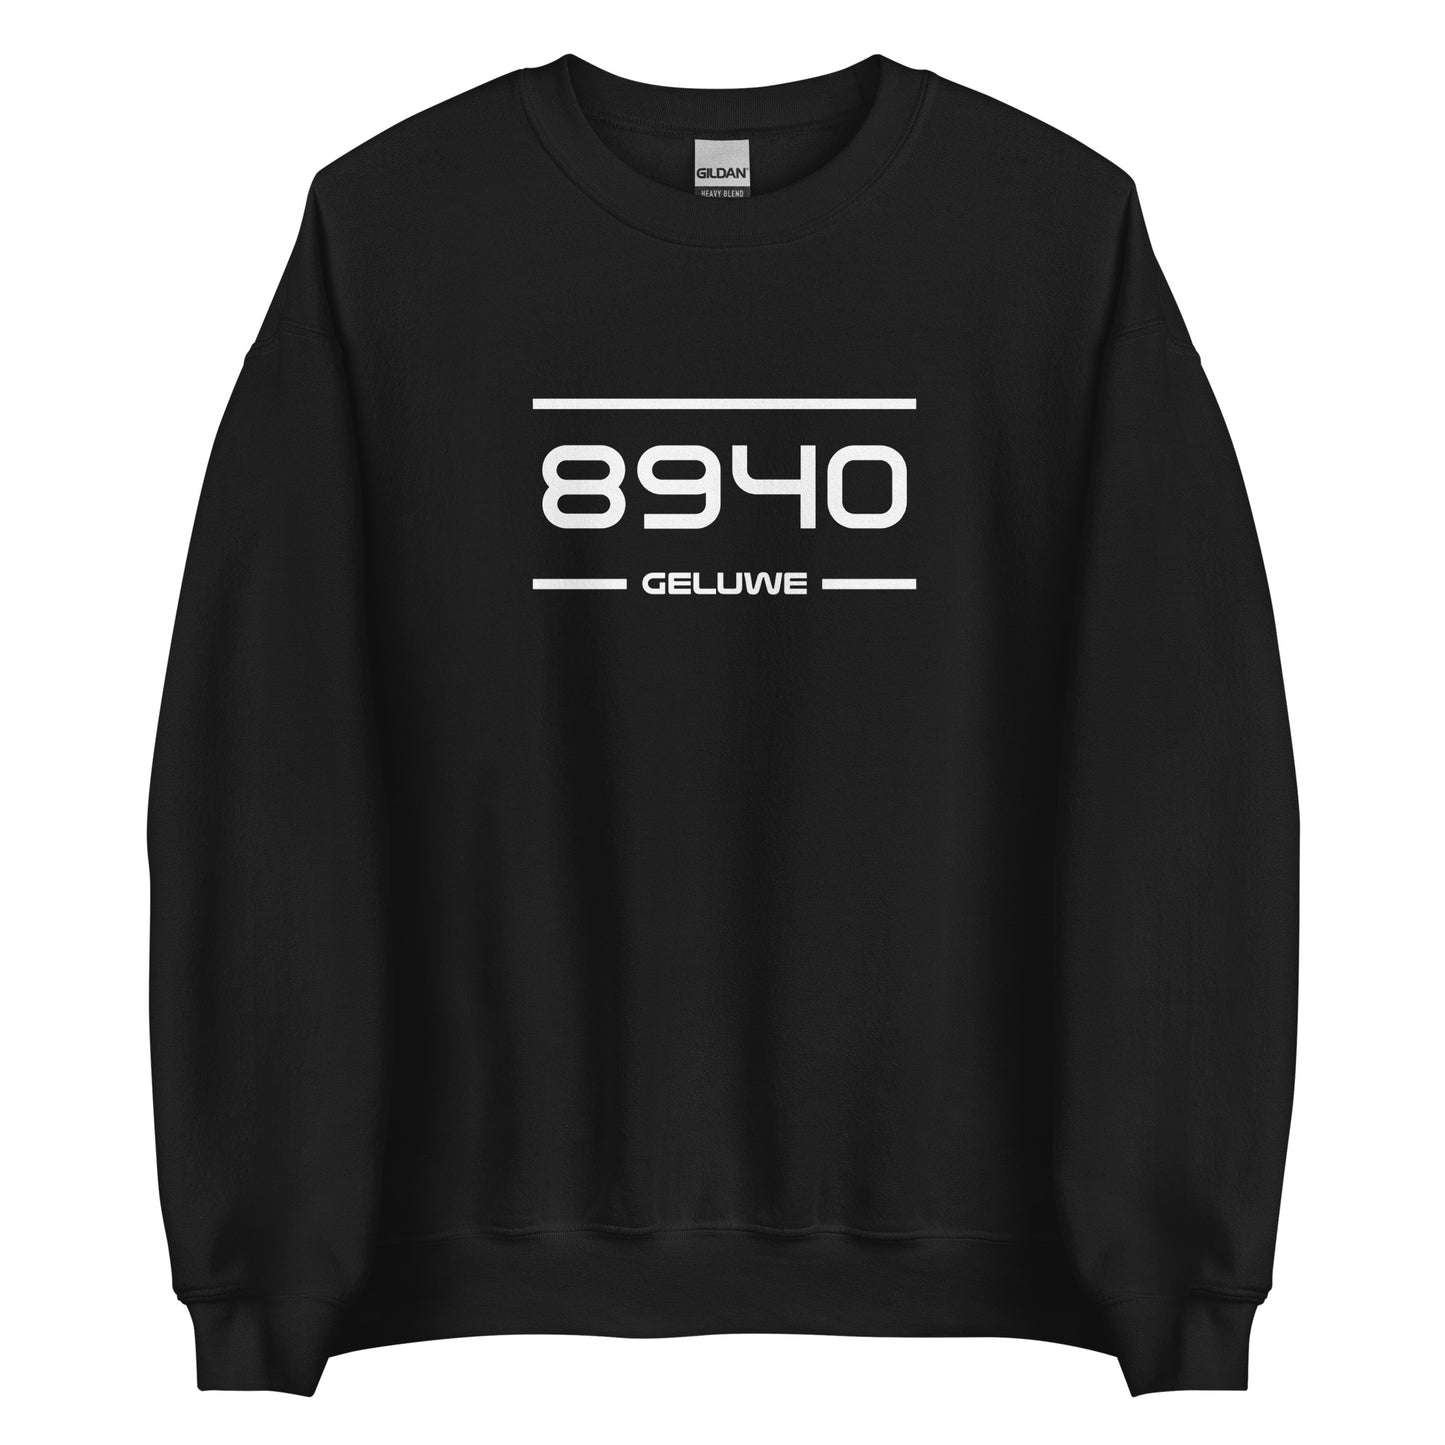 Sweater - 8940 - Geluwe (M/V)